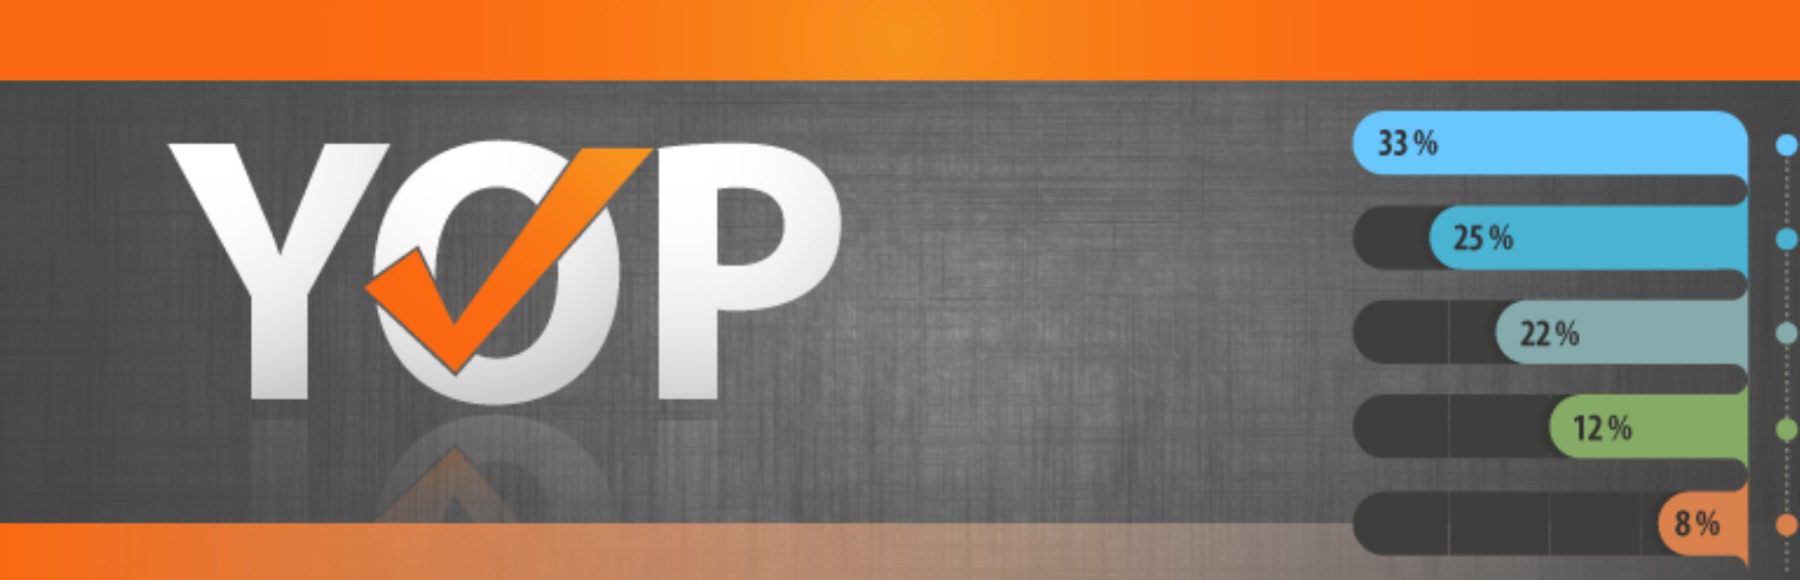 YOP poll banner logo